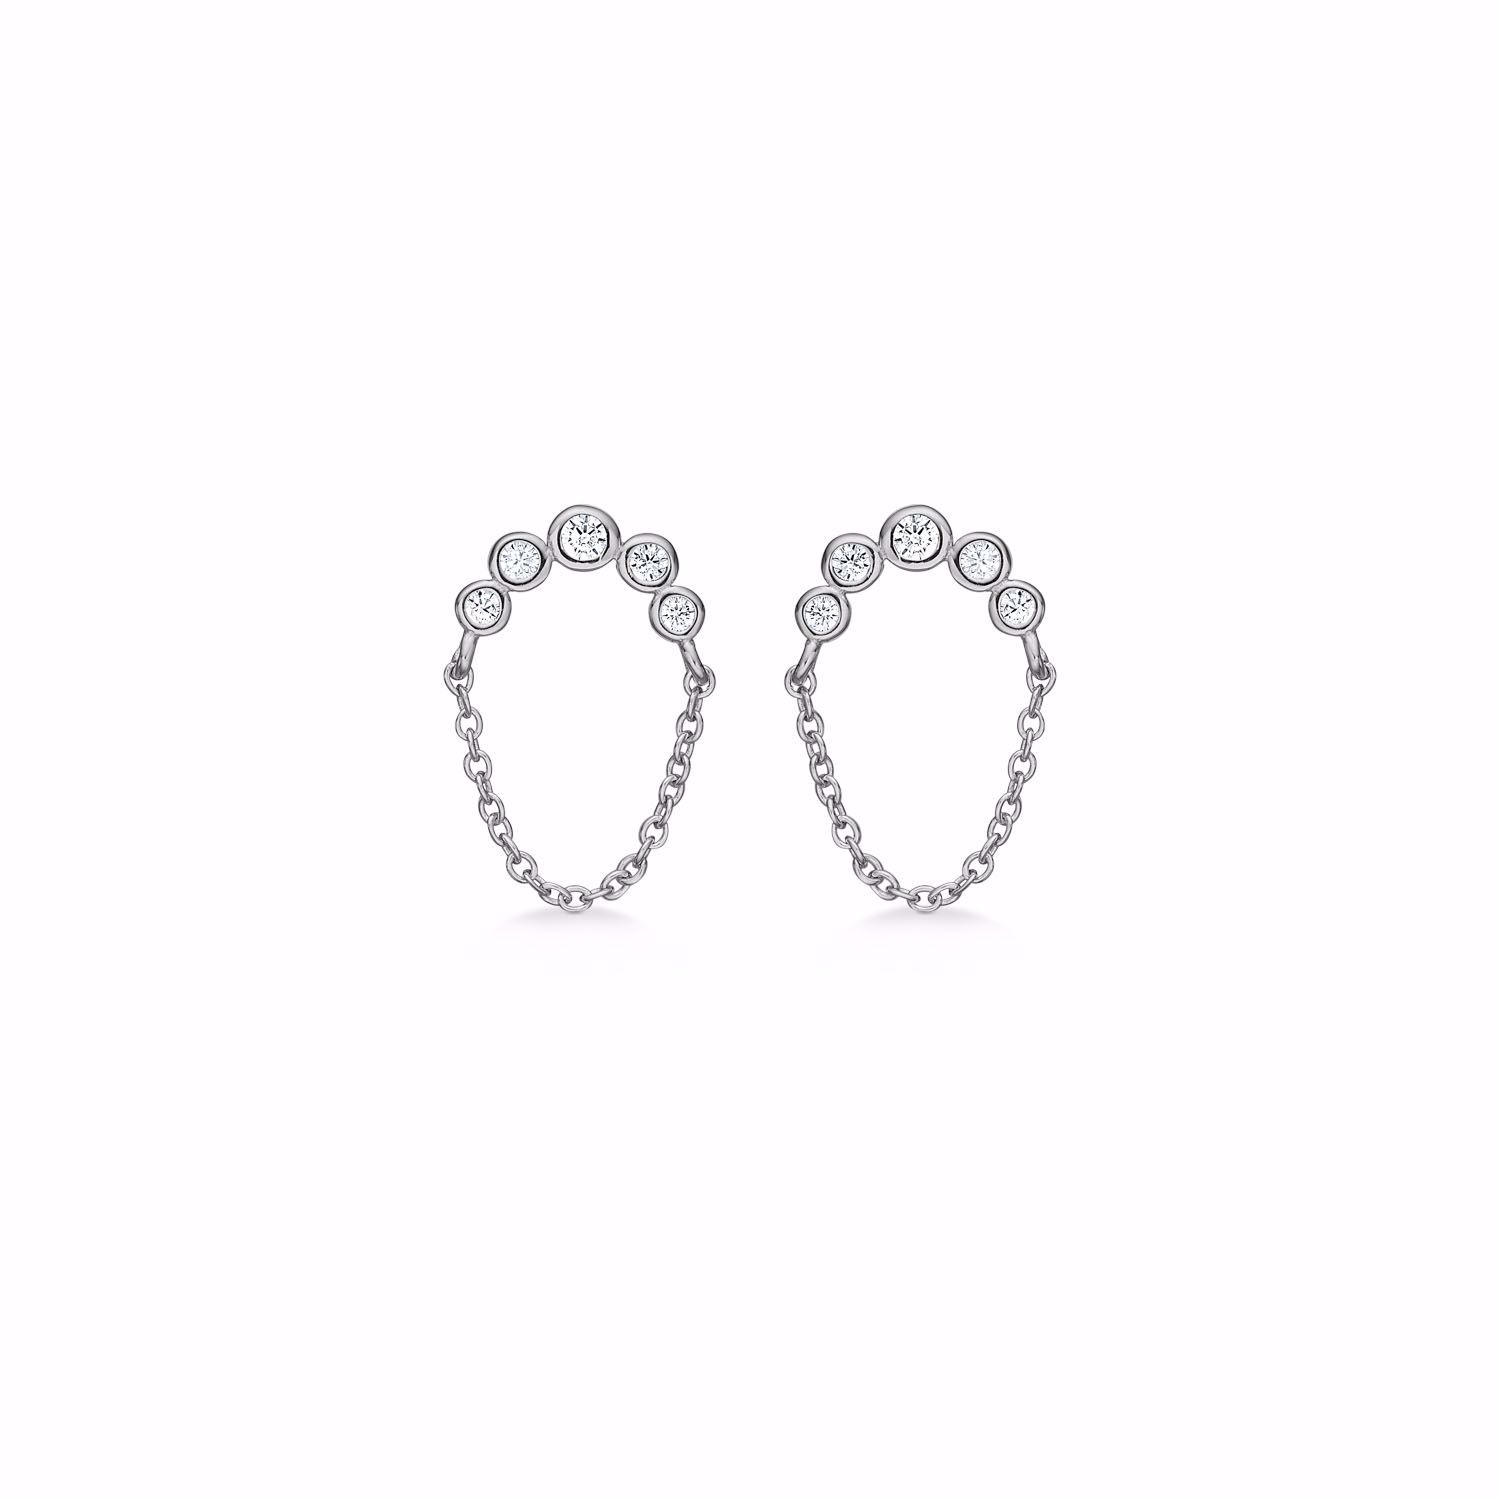 Seville Jewelry sølv øreringe med kæde 2031-1